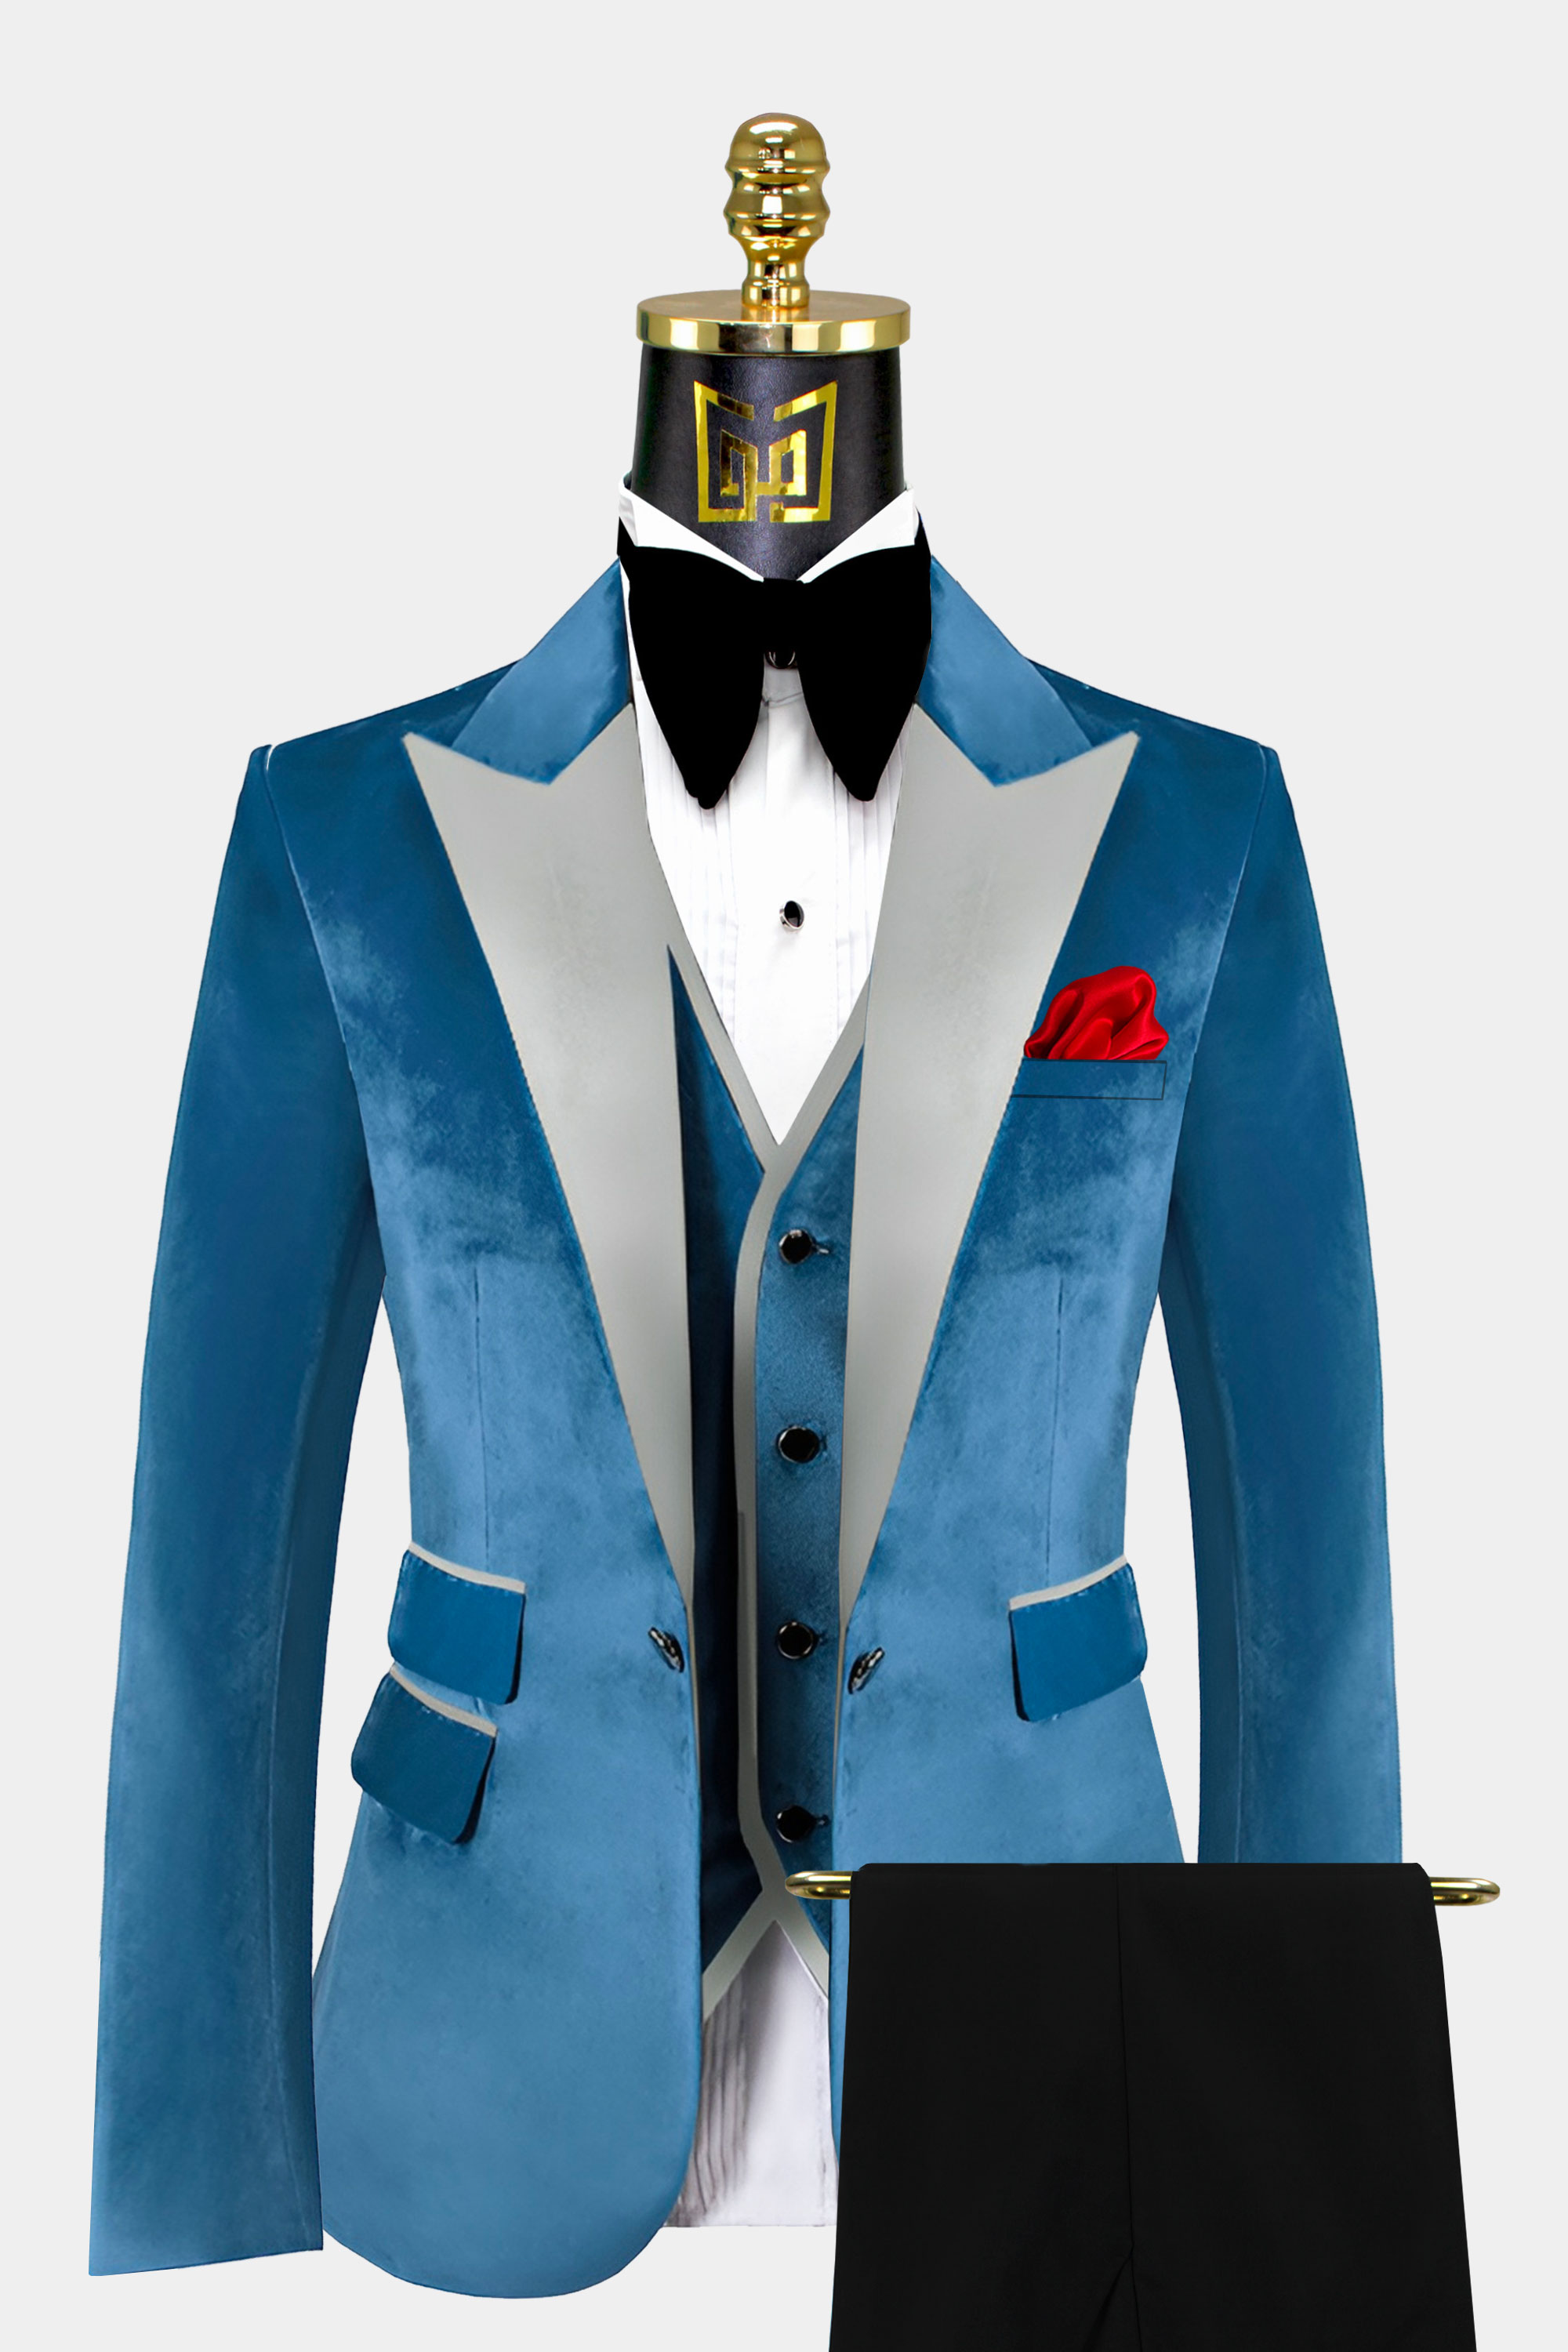 Black-and-Blue-Velvet-Tuxedo-Groom-Prom-Suit-from-Gentlemansguru.com